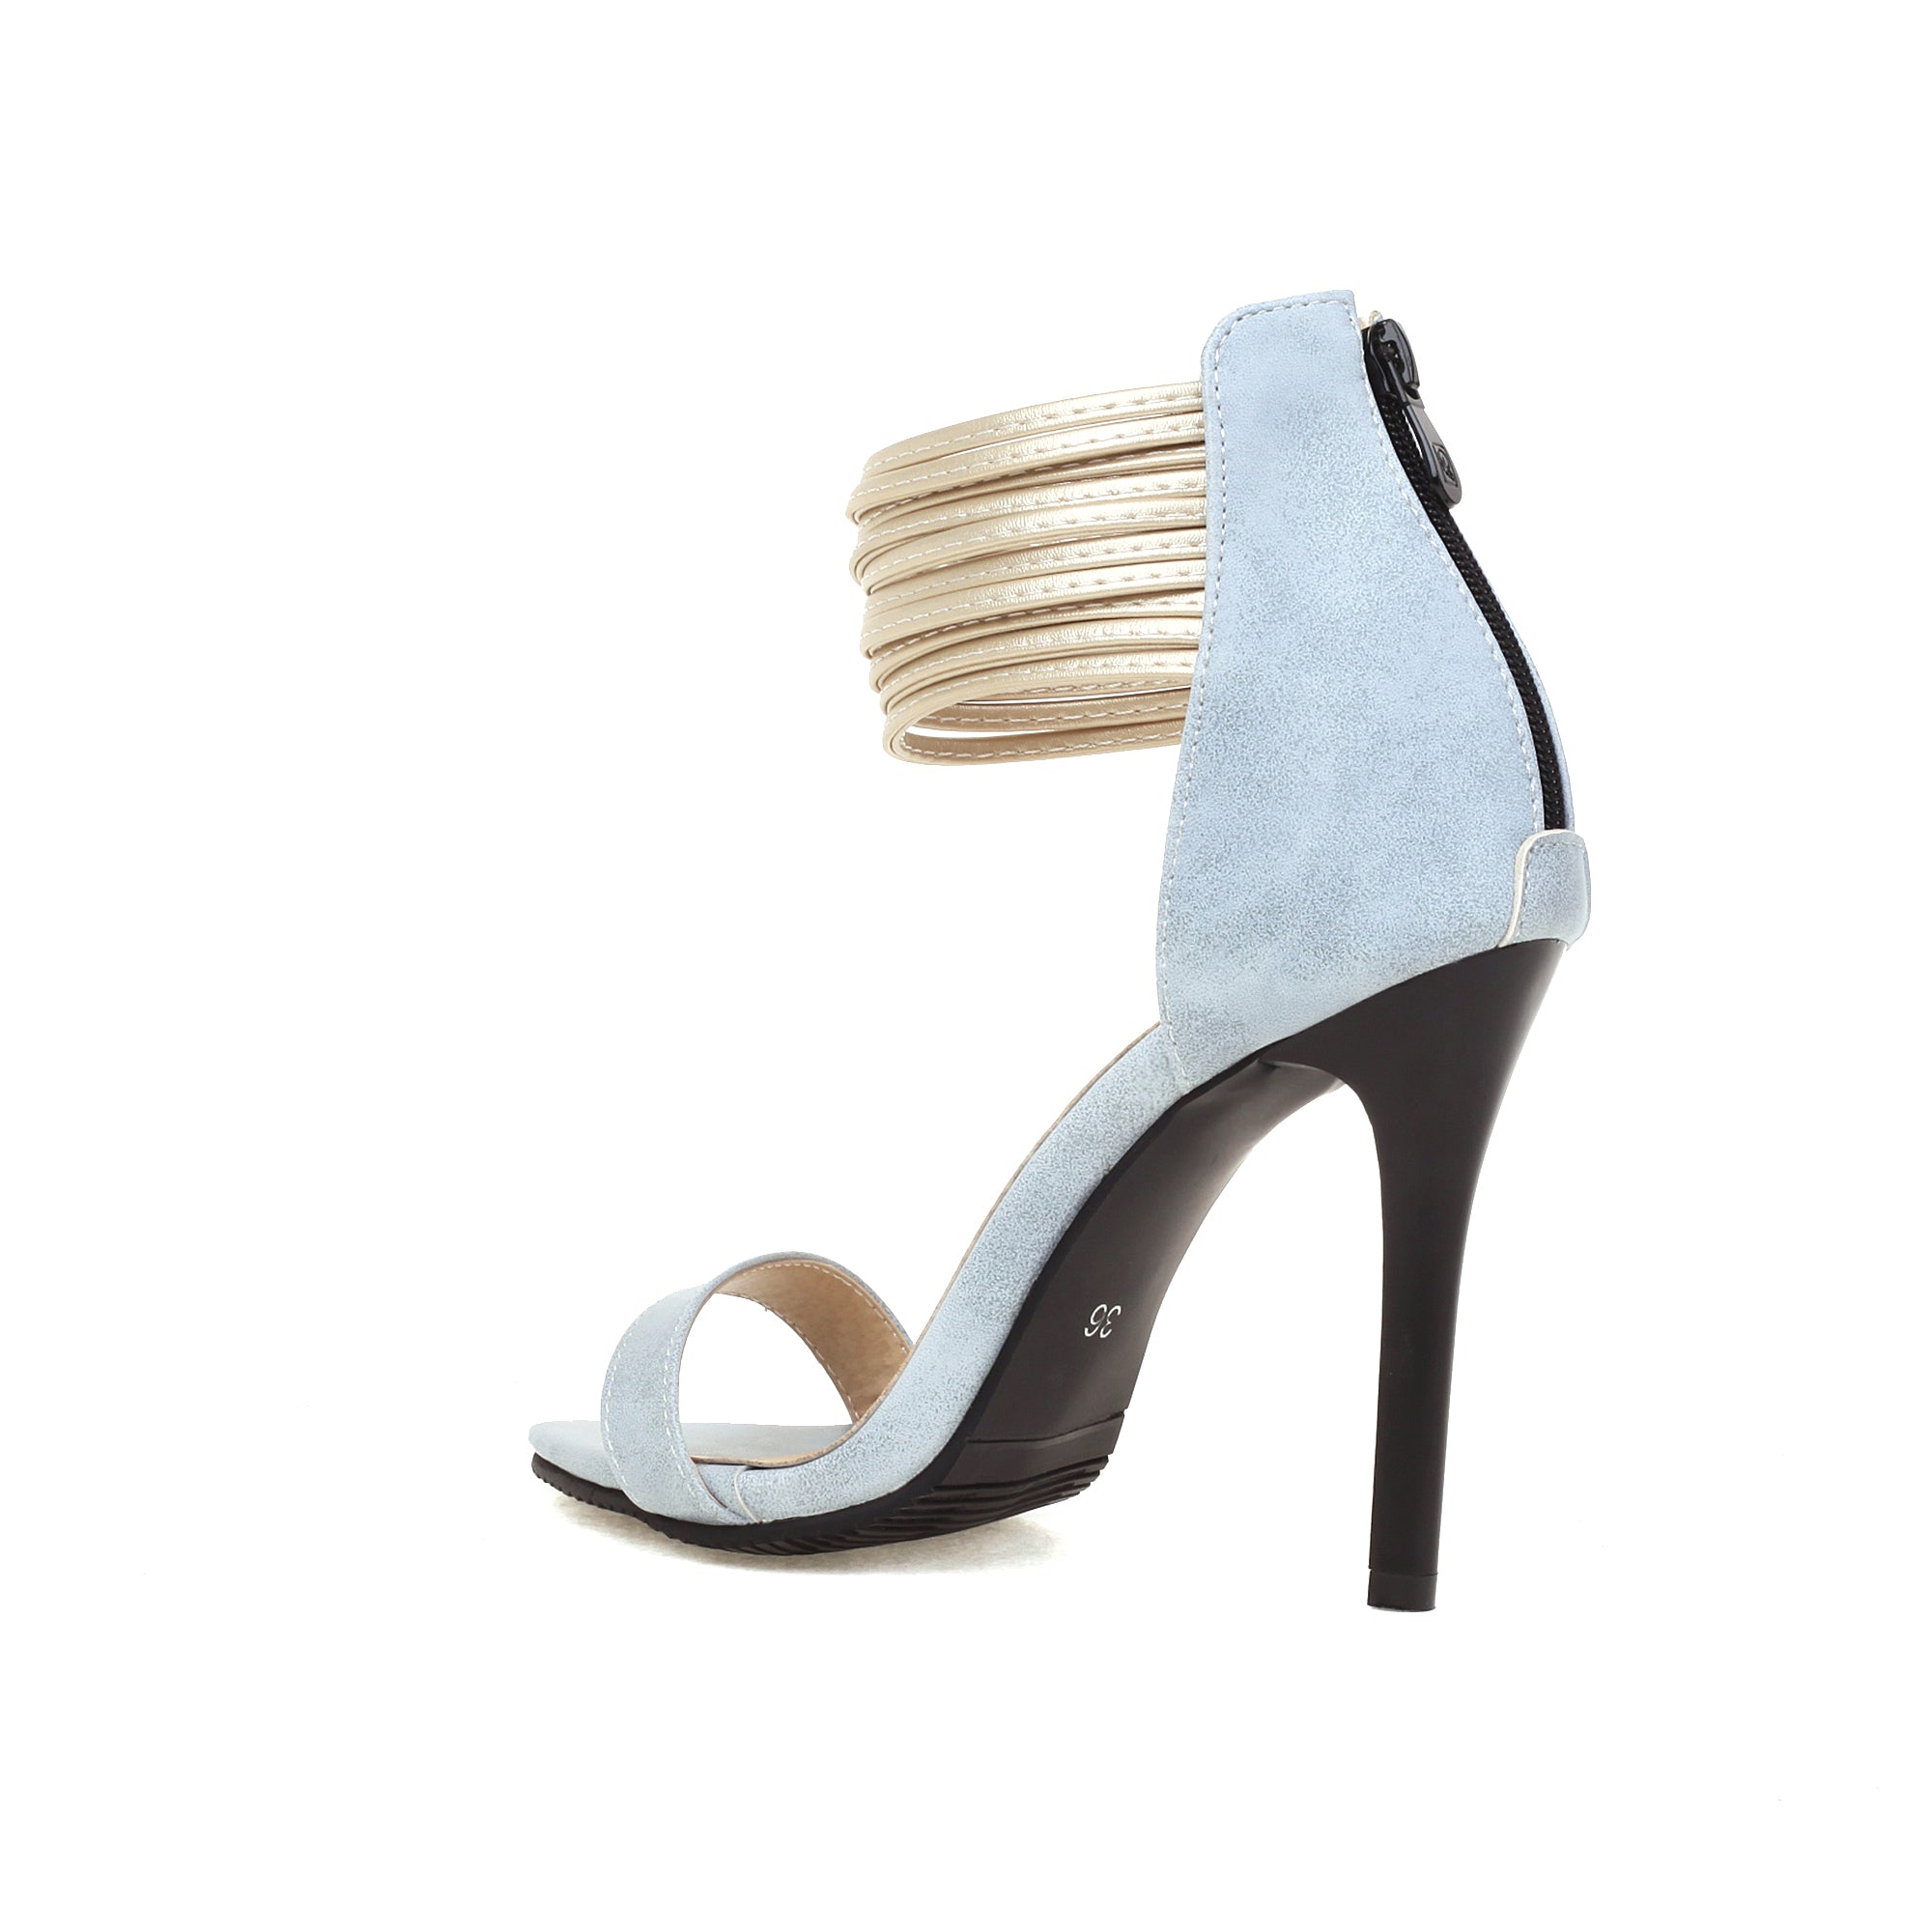 Bigsizeheels Stiletto Heel Pointed Toe Leather Lace Up Sandals -Light blue best oversized womens heels are from bigsizeheels®